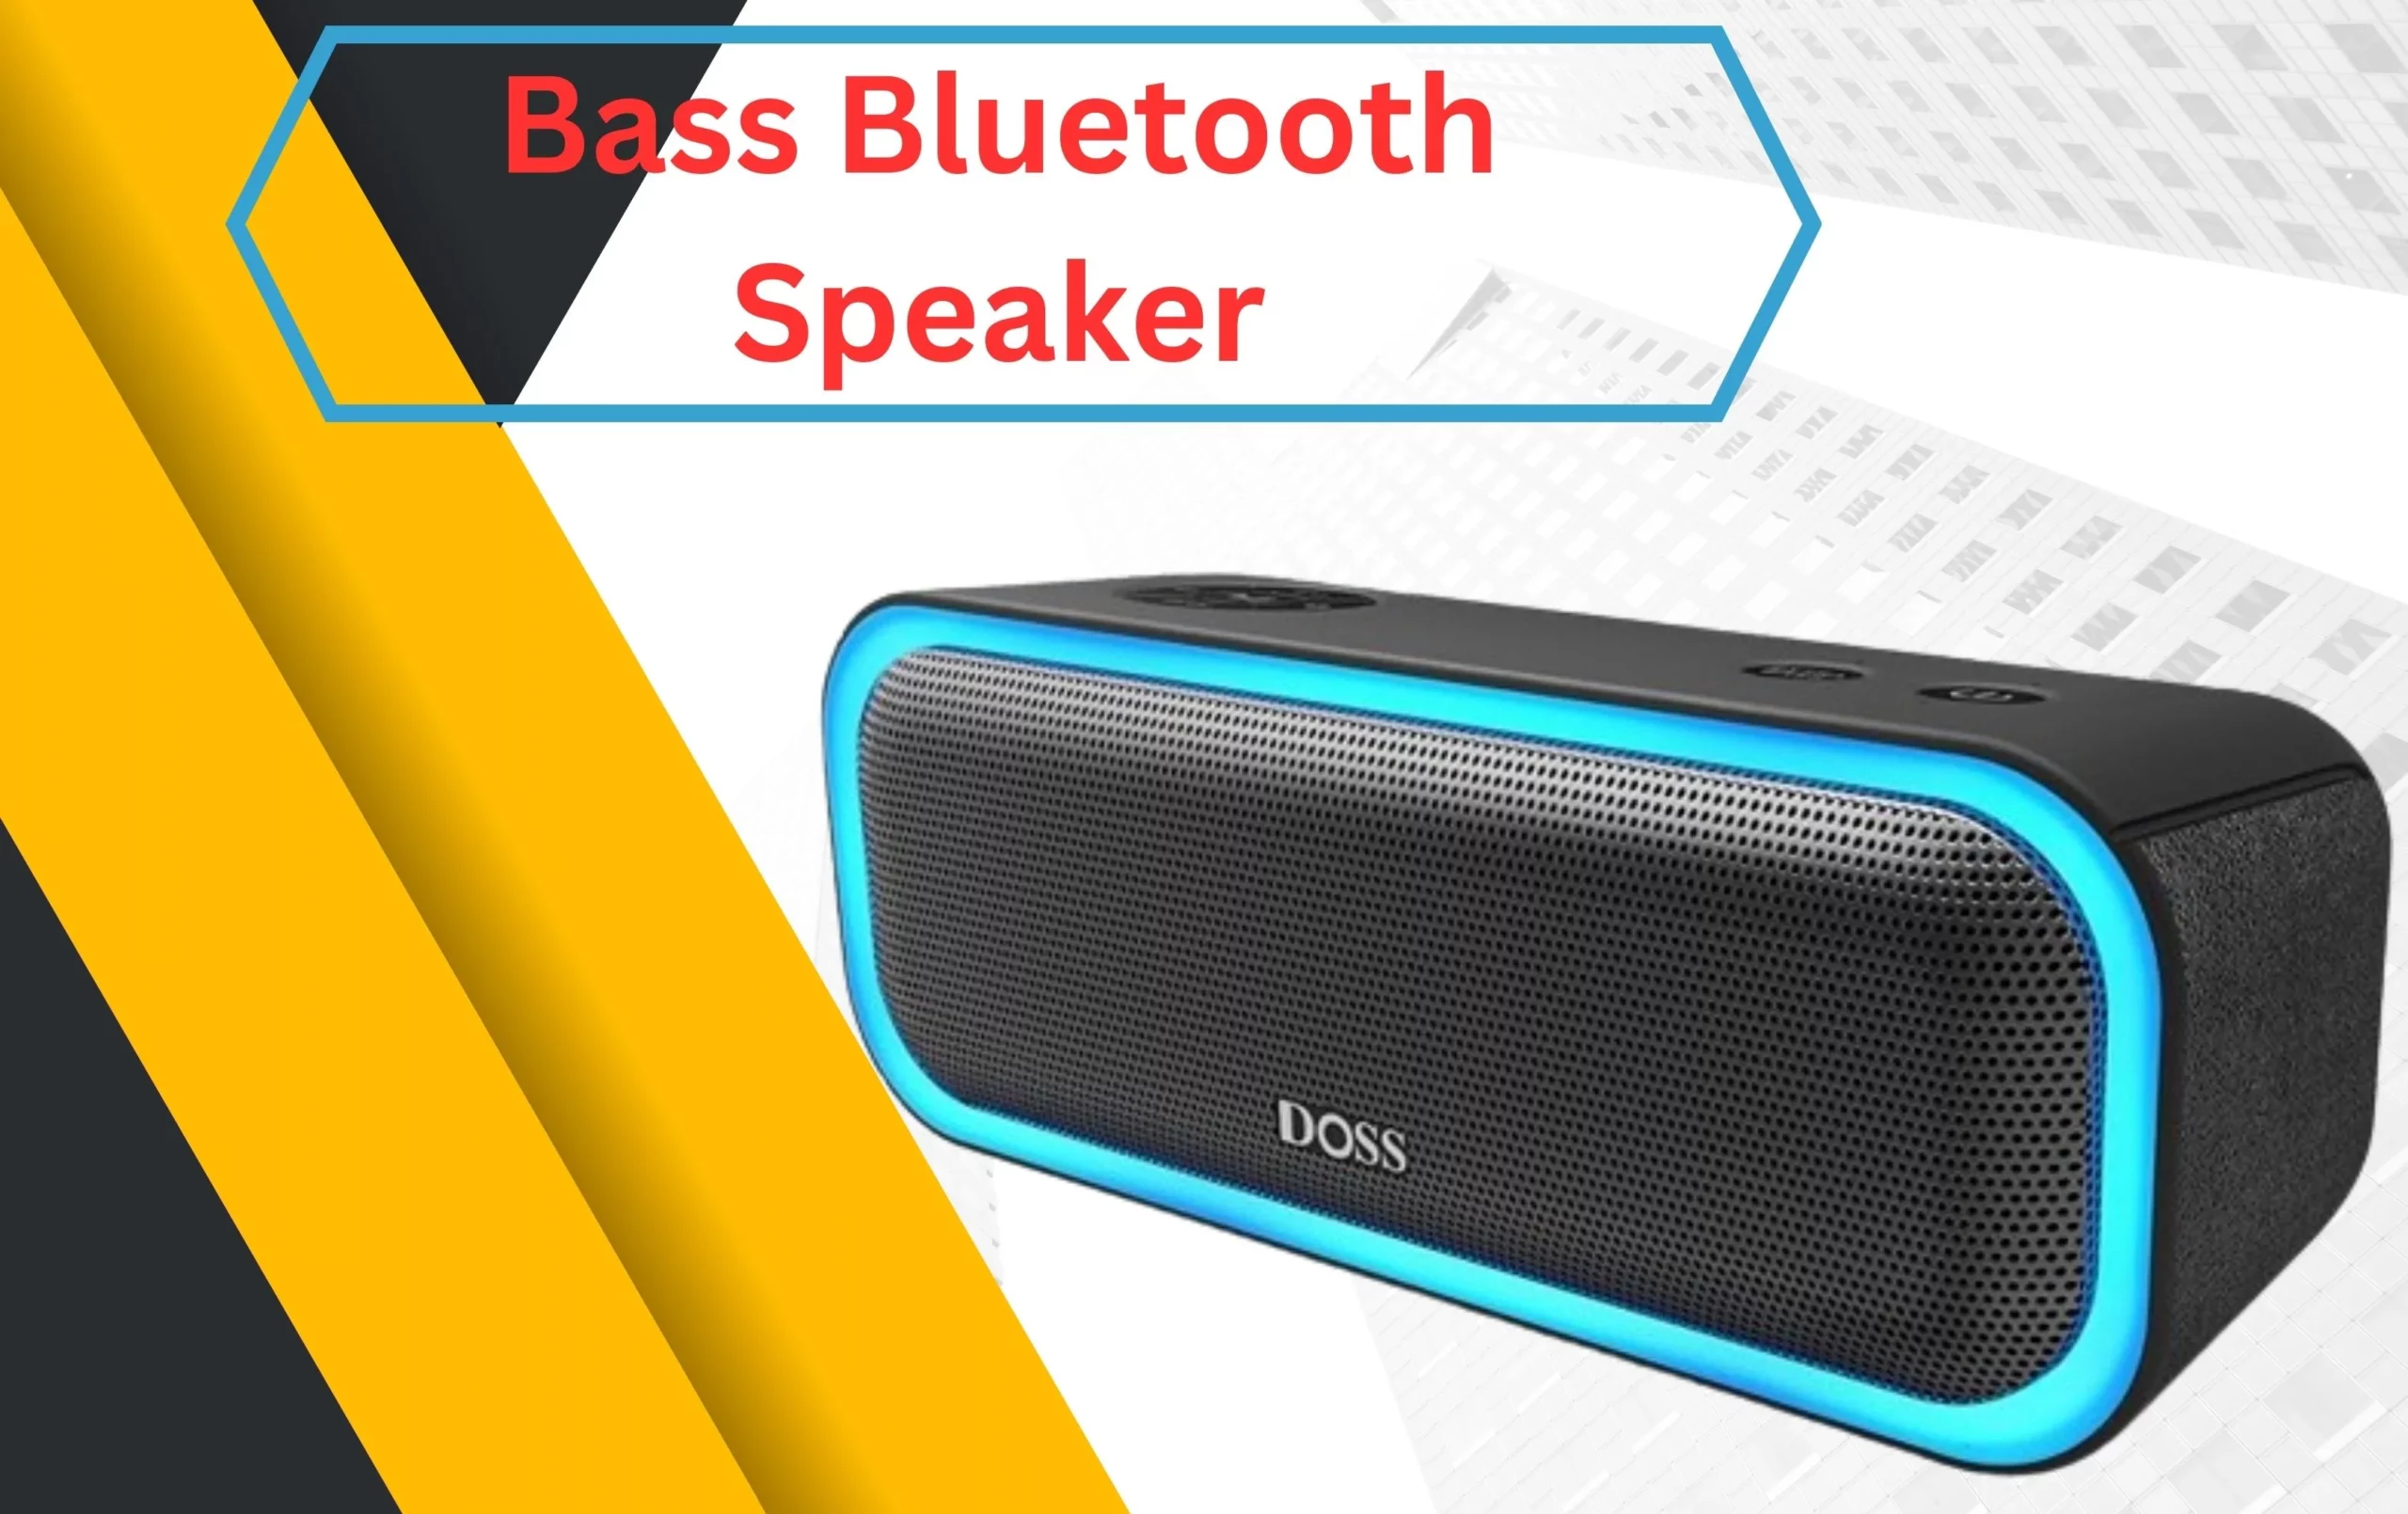 Bass Bluetooth Speaker